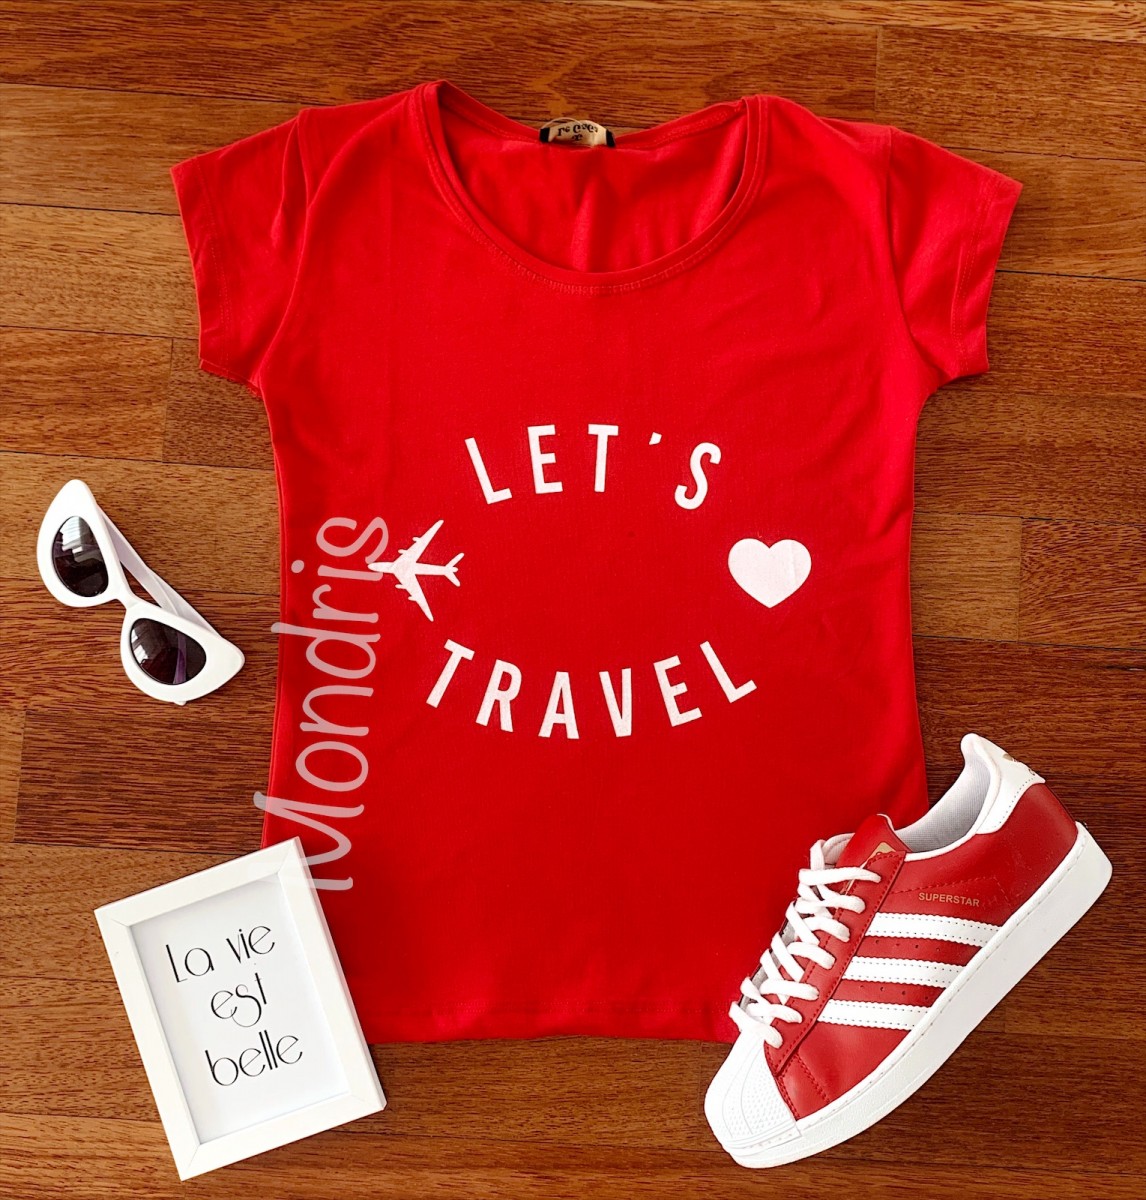 Tricou dama ieftin din bumbac rosu cu imprimeu Let's travel